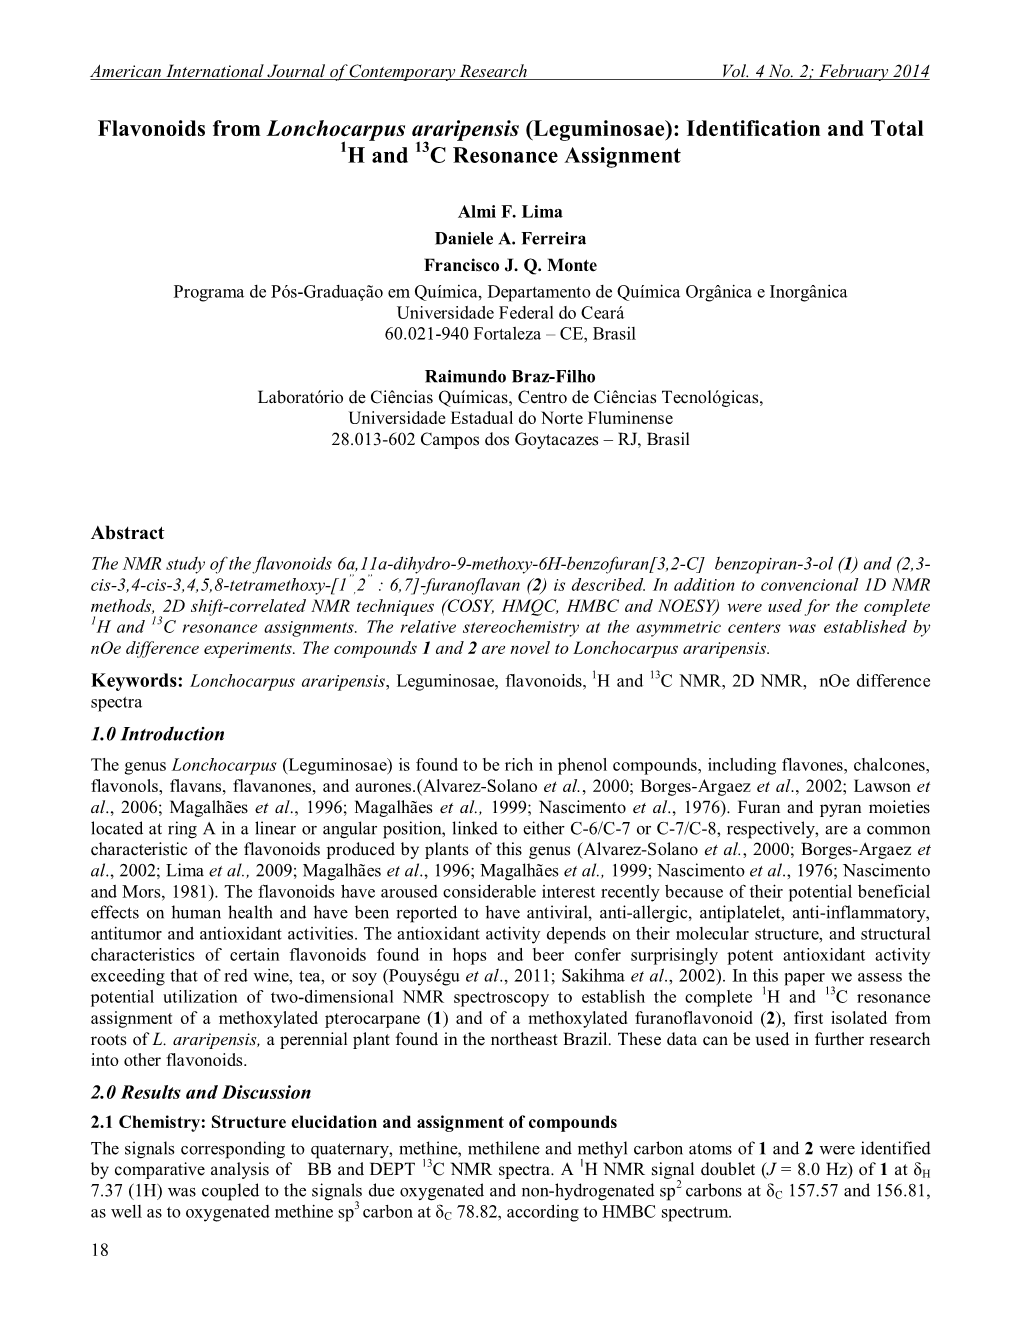 Flavonoids from Lonchocarpus Araripensis (Leguminosae): Identification and Total 1H and 13C Resonance Assignment